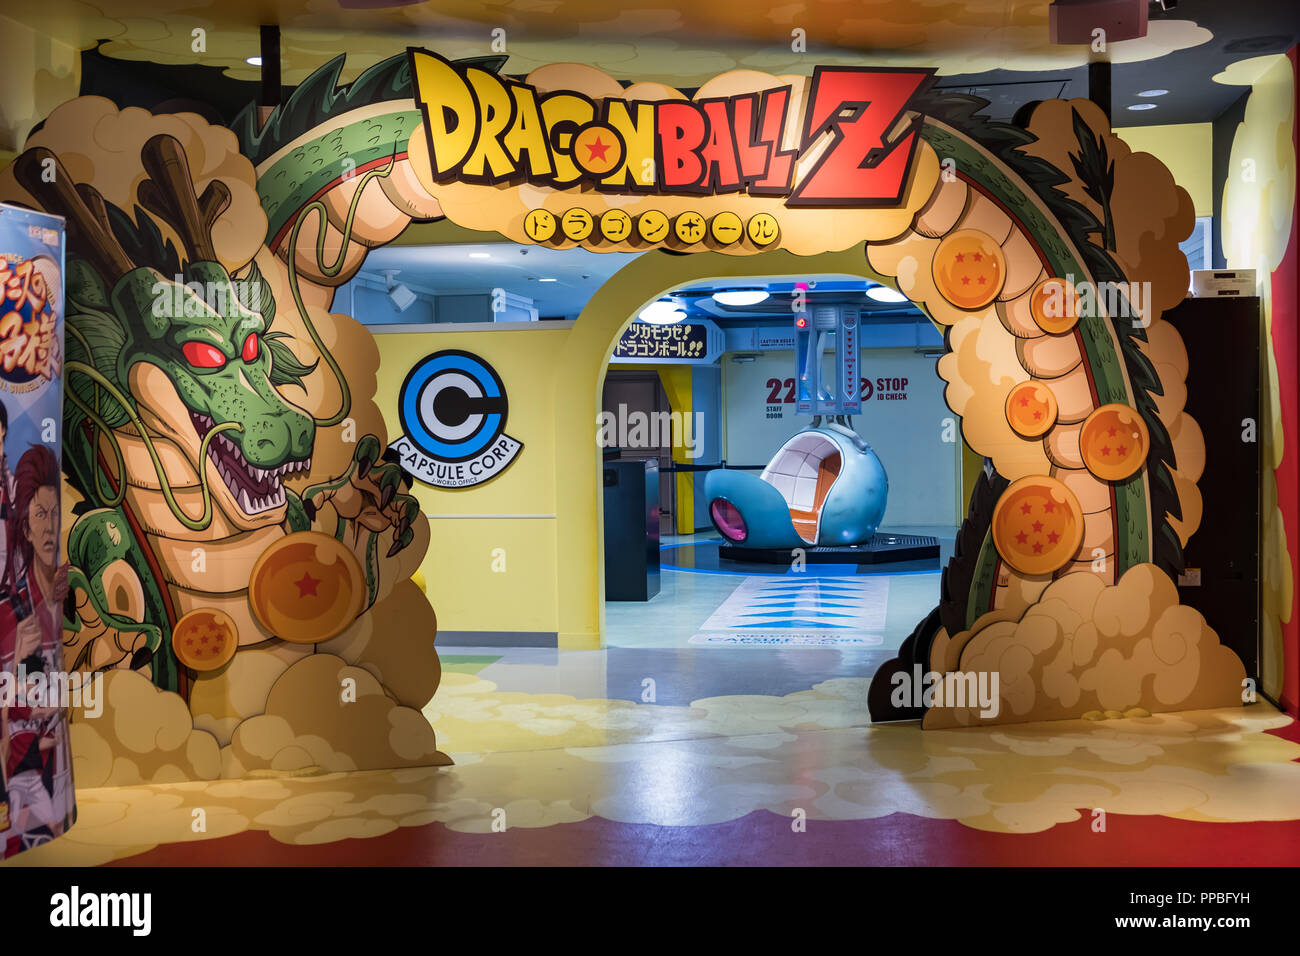 Goku dragon ball hi-res stock photography and images - Alamy